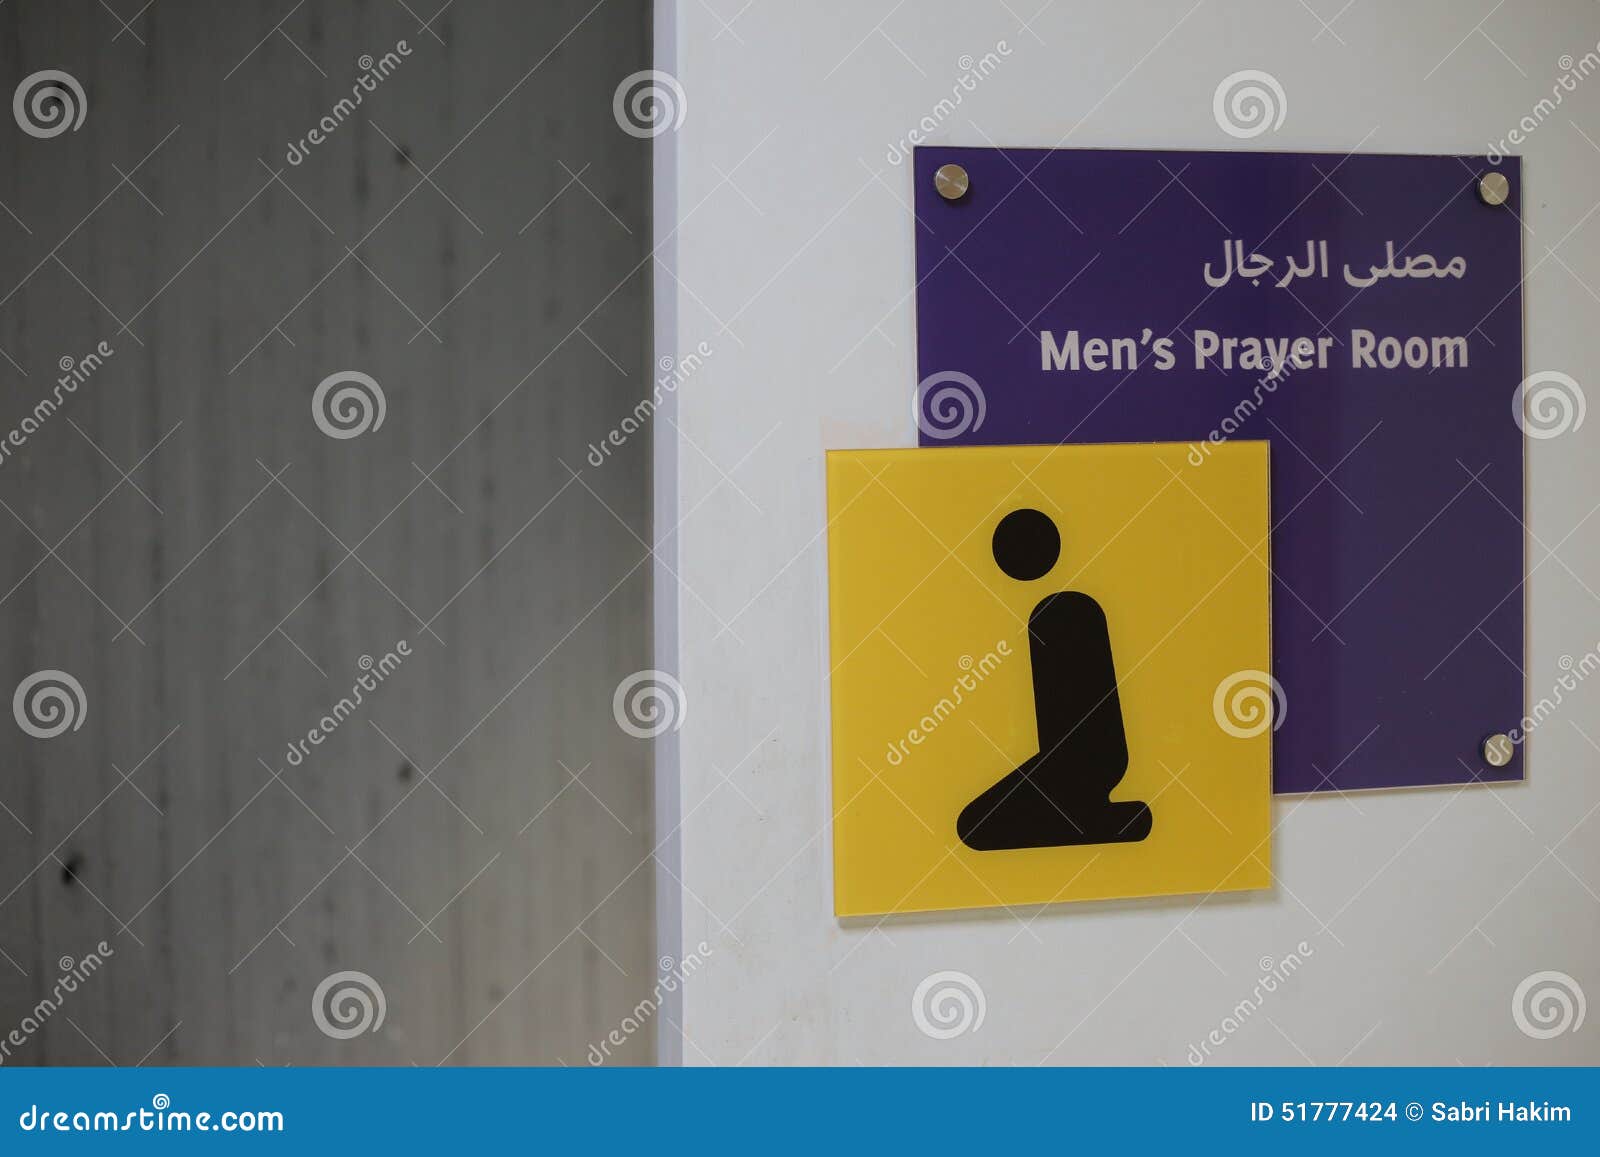 men's room clipart - photo #50